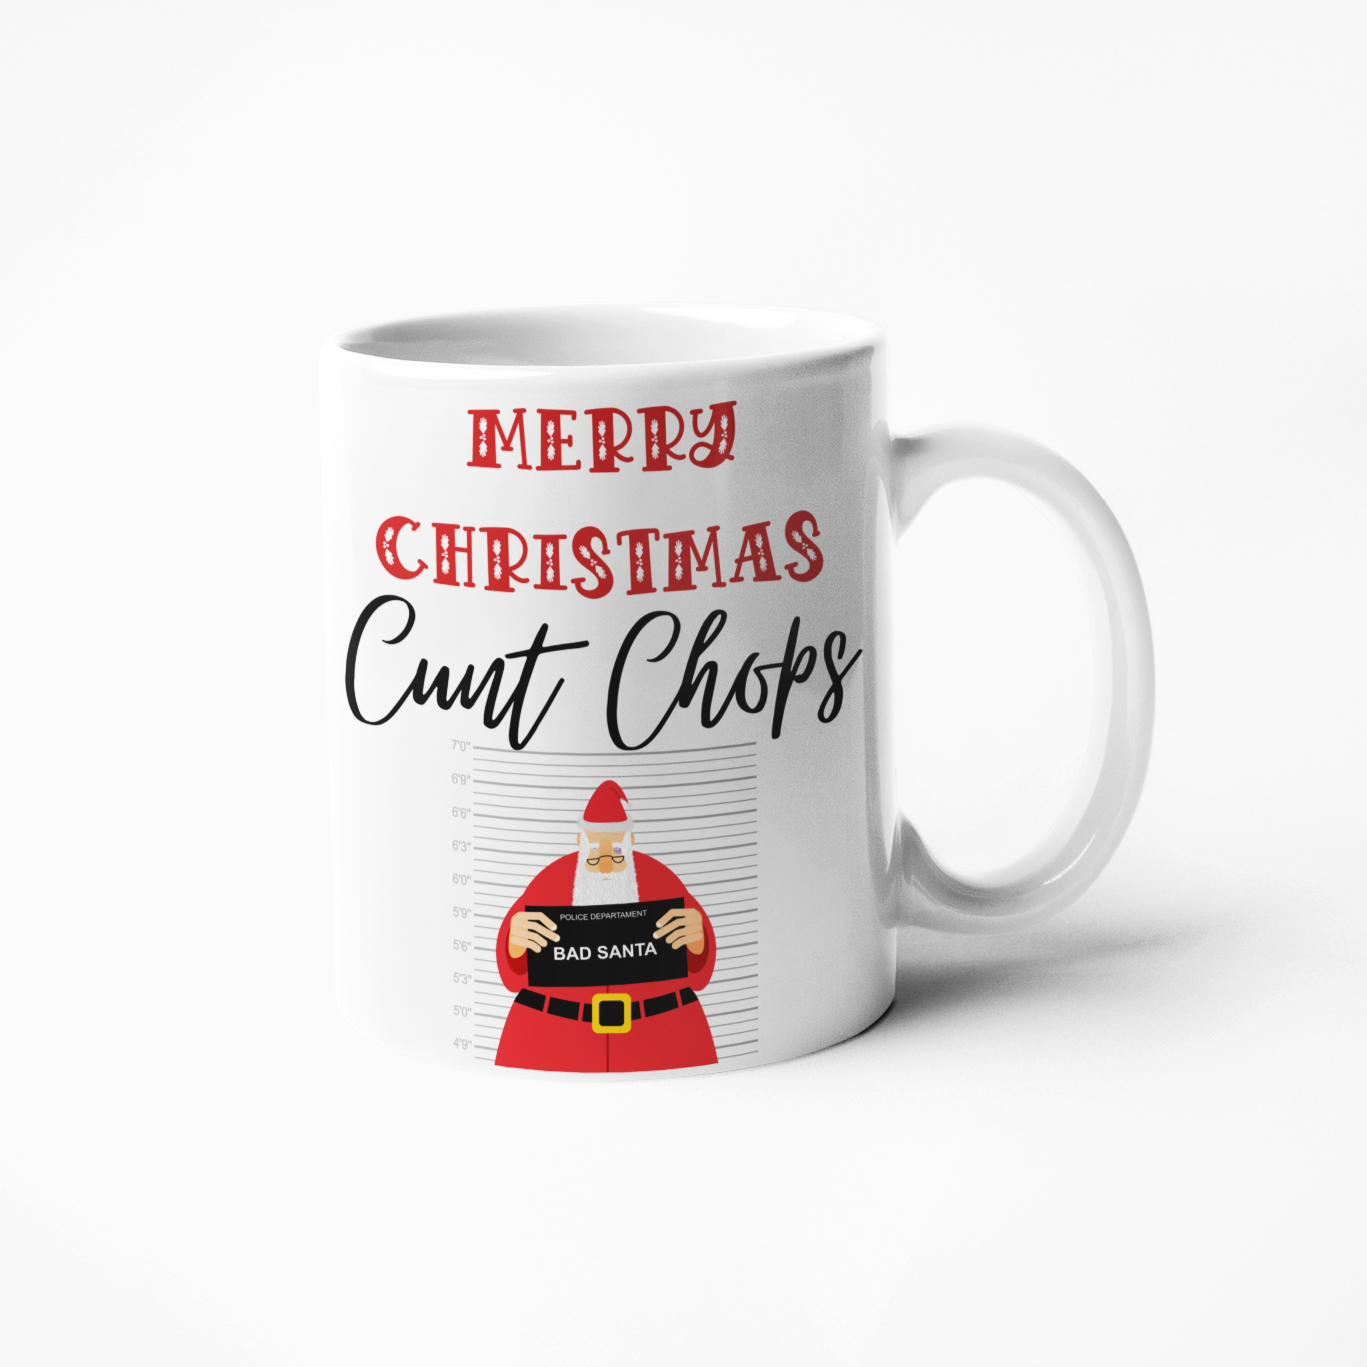 Merry Christmas cunt chops mug